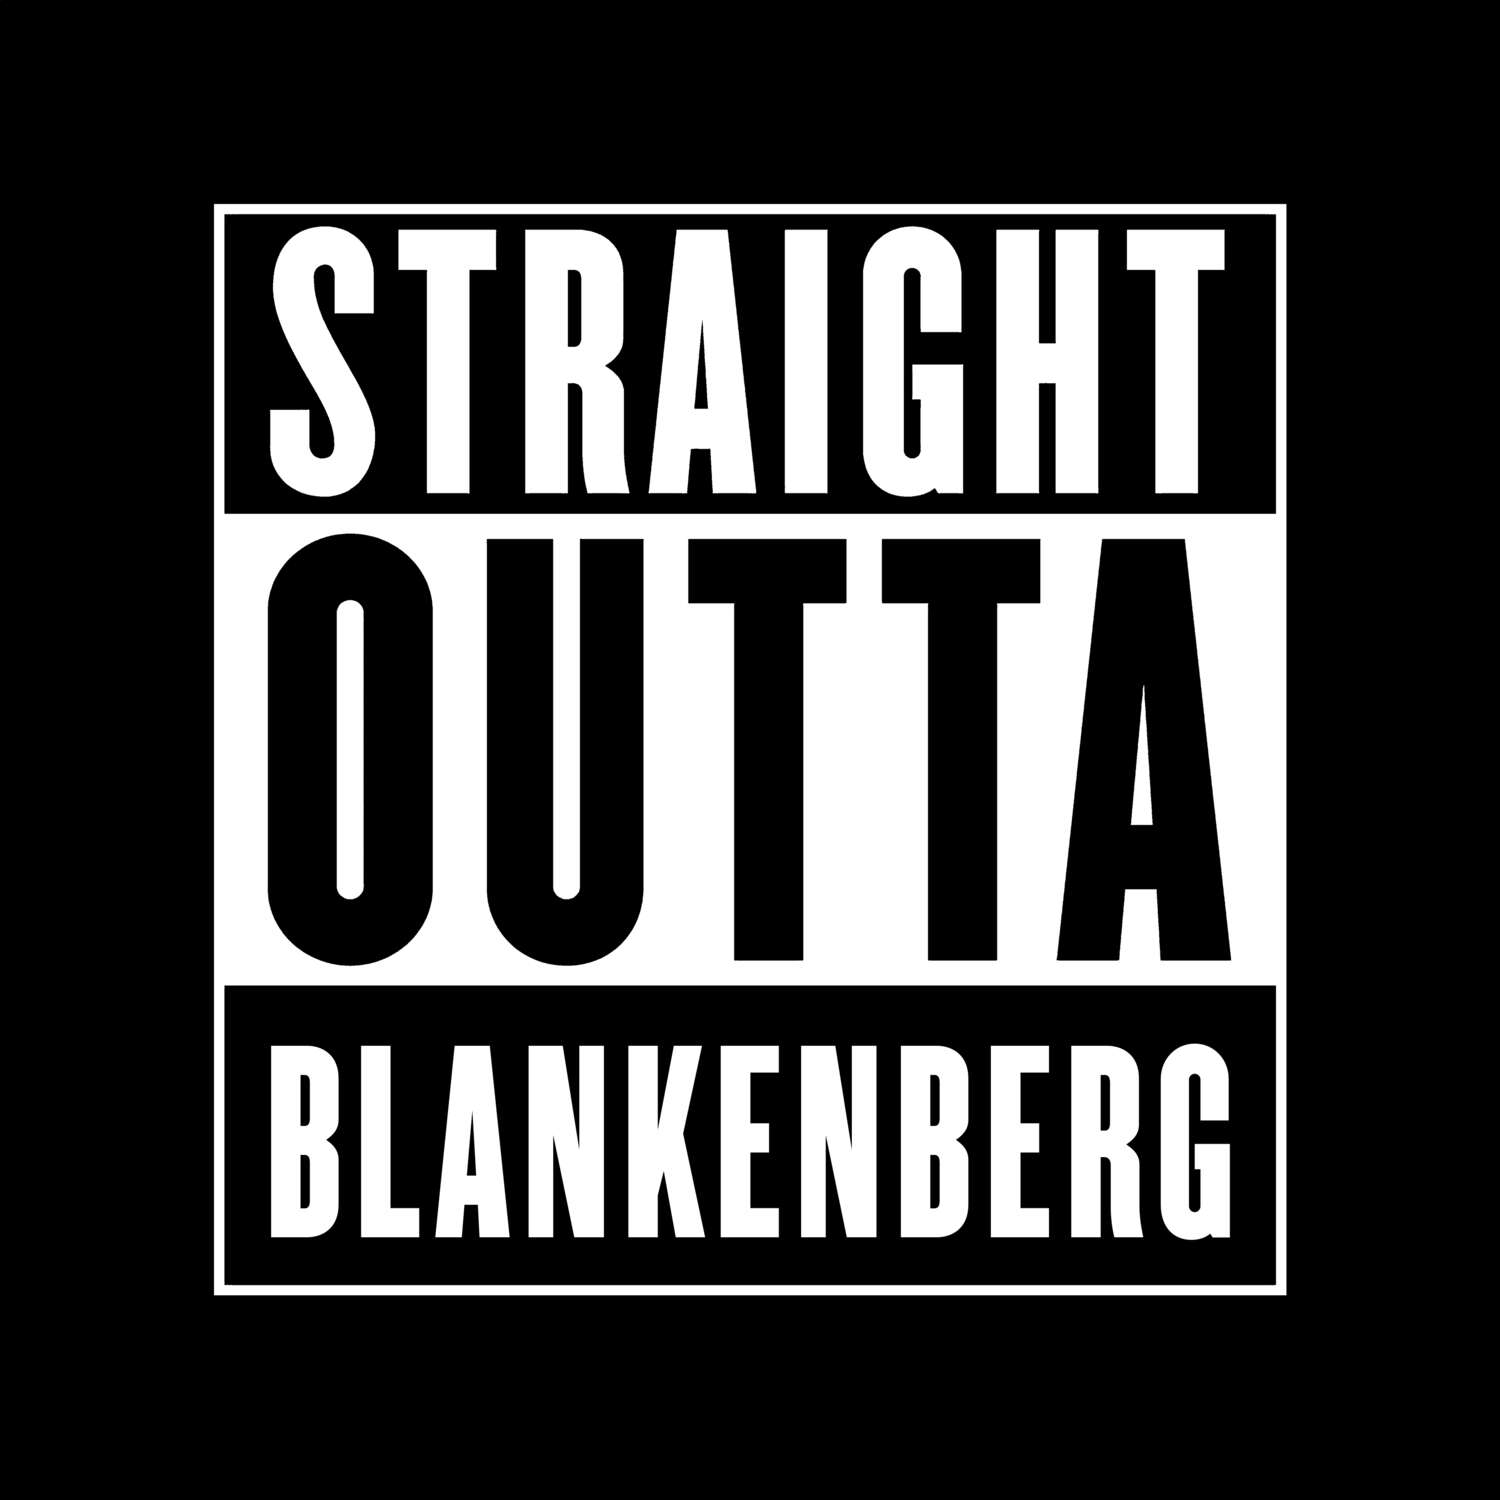 Blankenberg T-Shirt »Straight Outta«